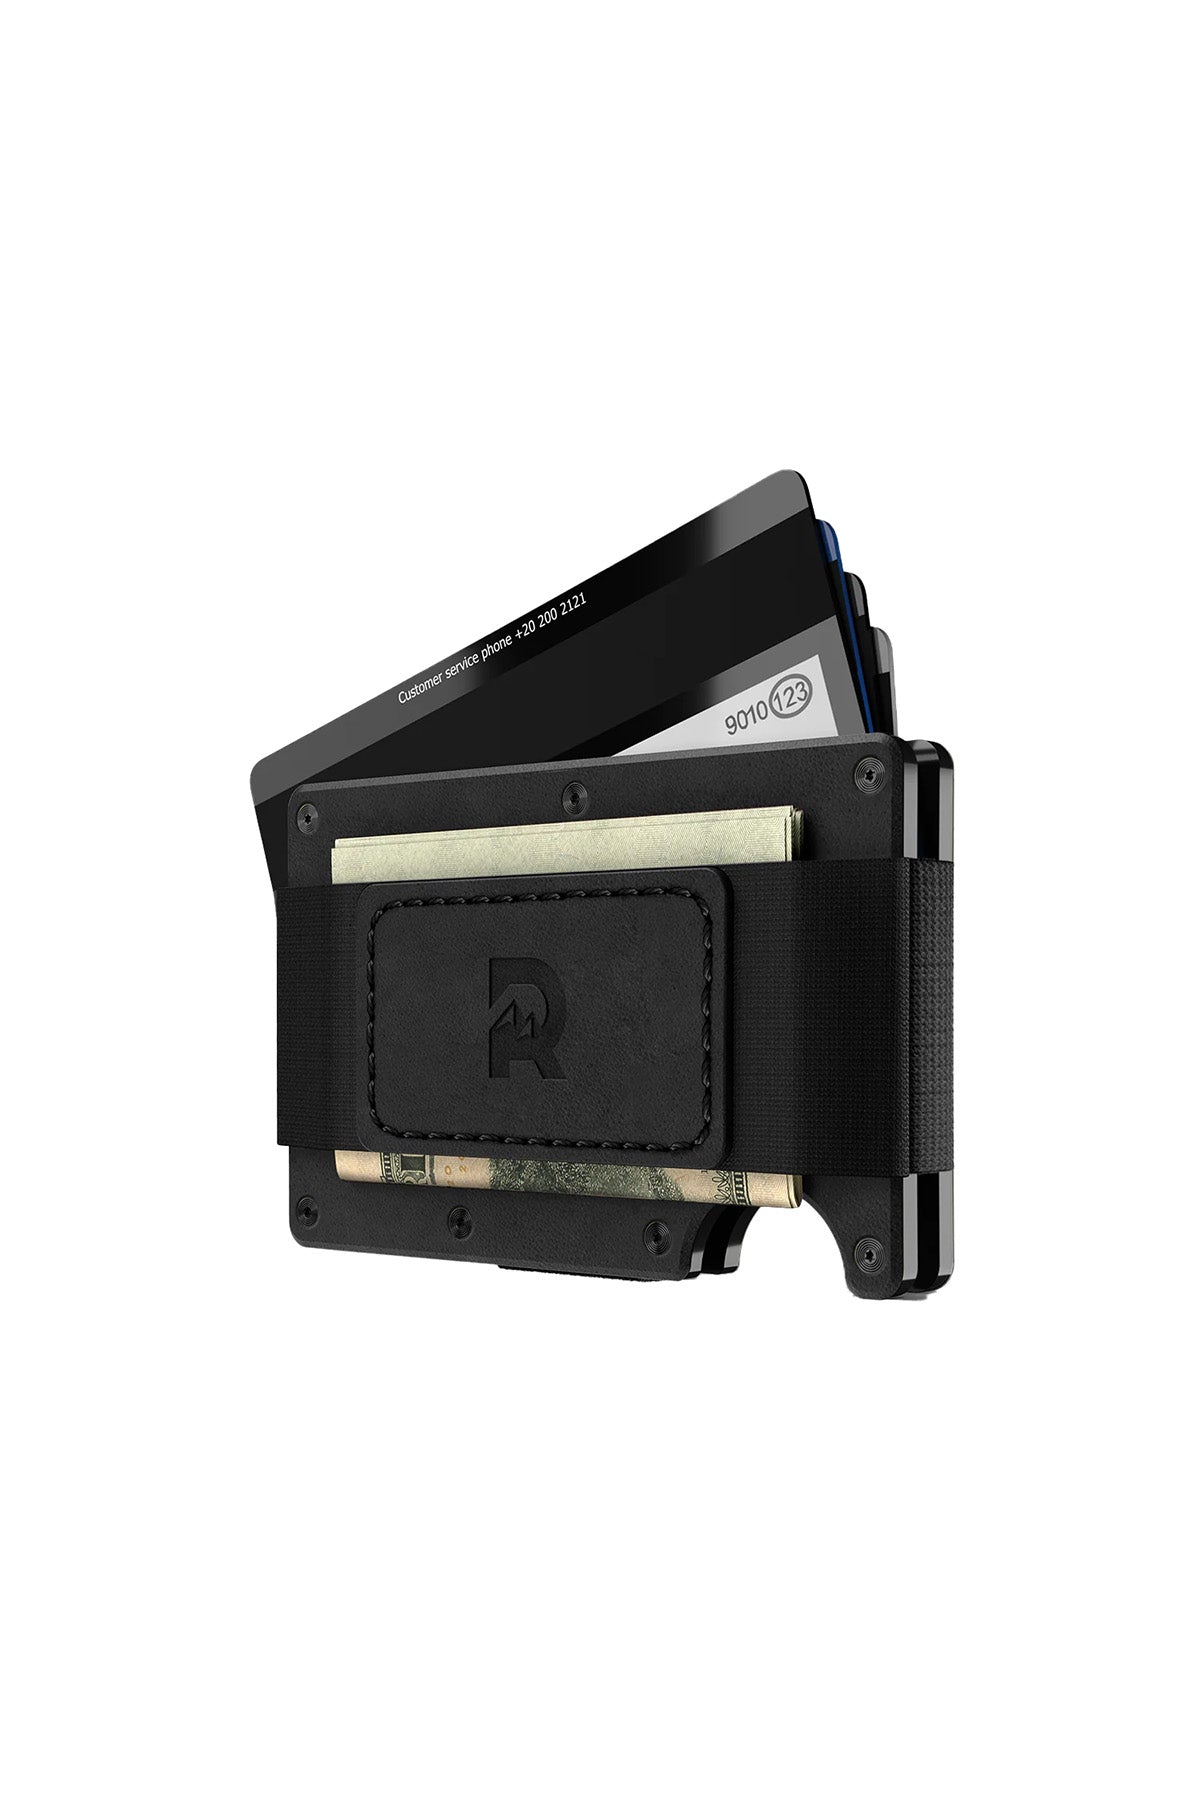 Ridge Wallet - Leather Wallet - Midnight Black